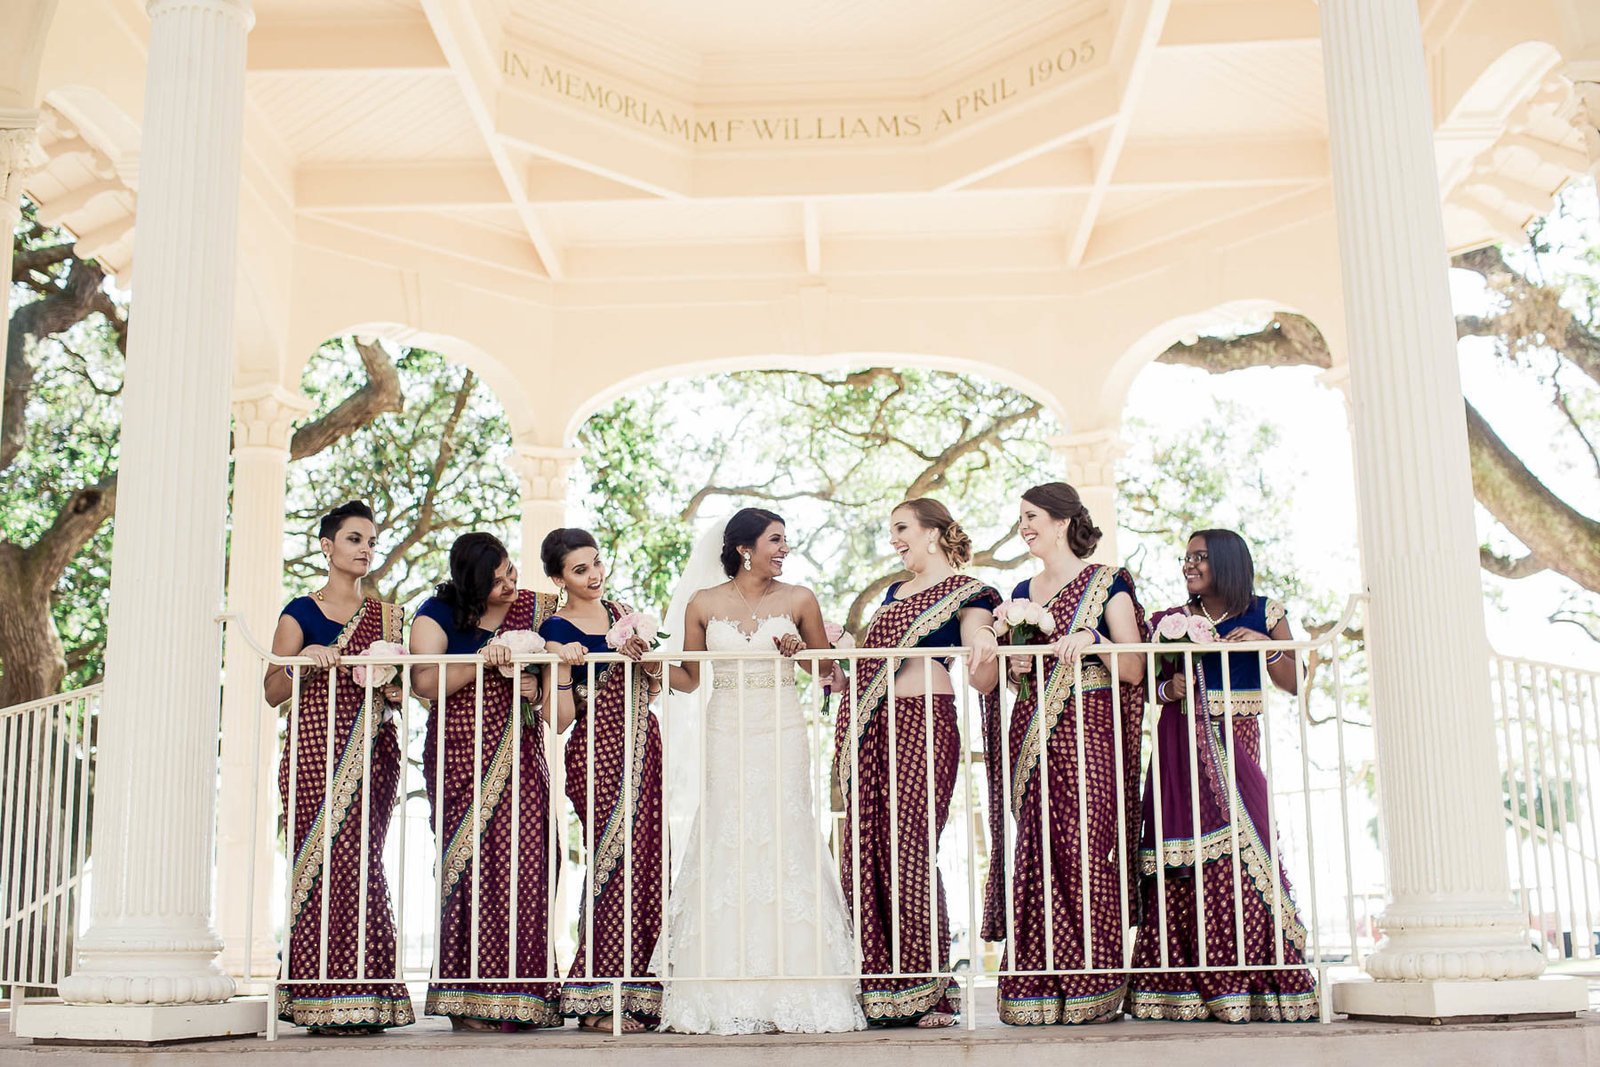 Bride poses with bridesmaids at gazebo of White Point Garden, South Carolina